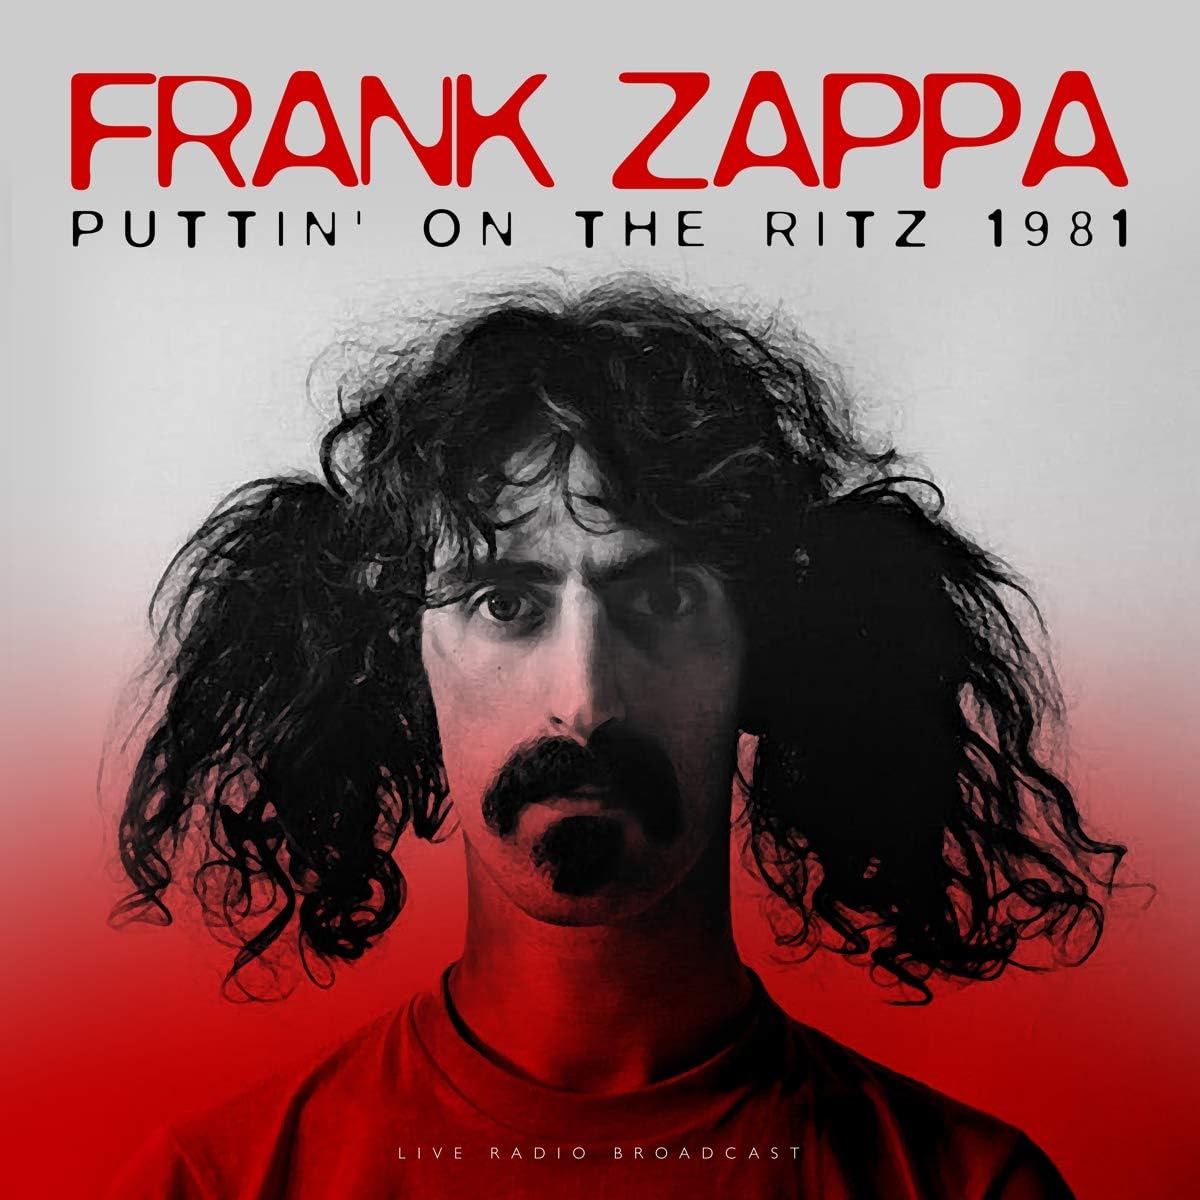 Frank Zappa Puttin On The Ritz 81